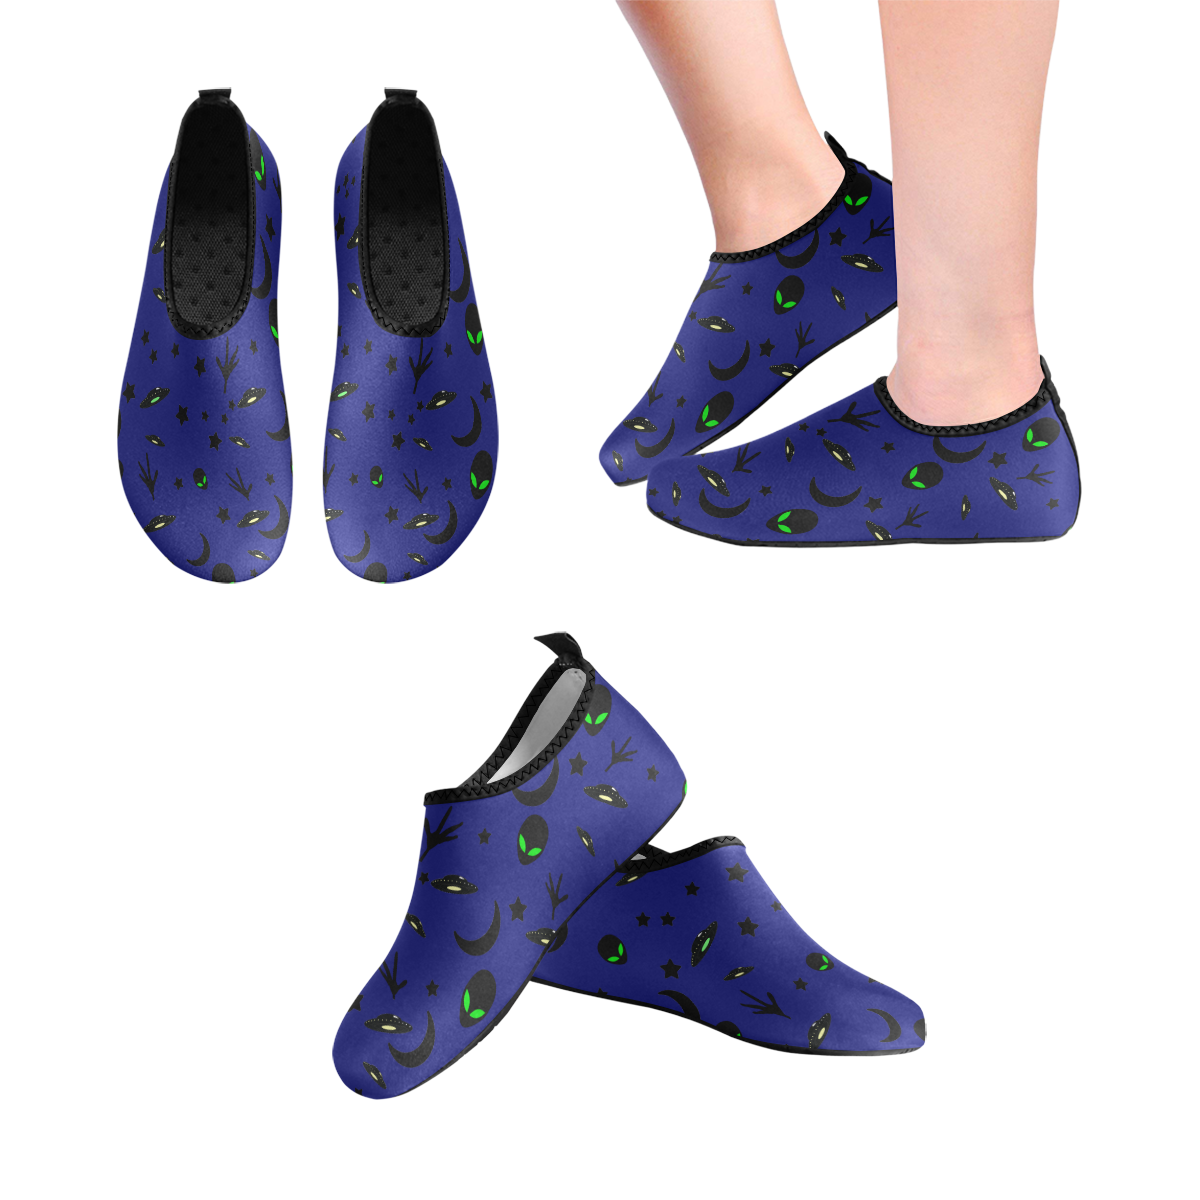 Alien Flying Saucers Stars Pattern on Blue Men's Slip-On Water Shoes (Model 056)